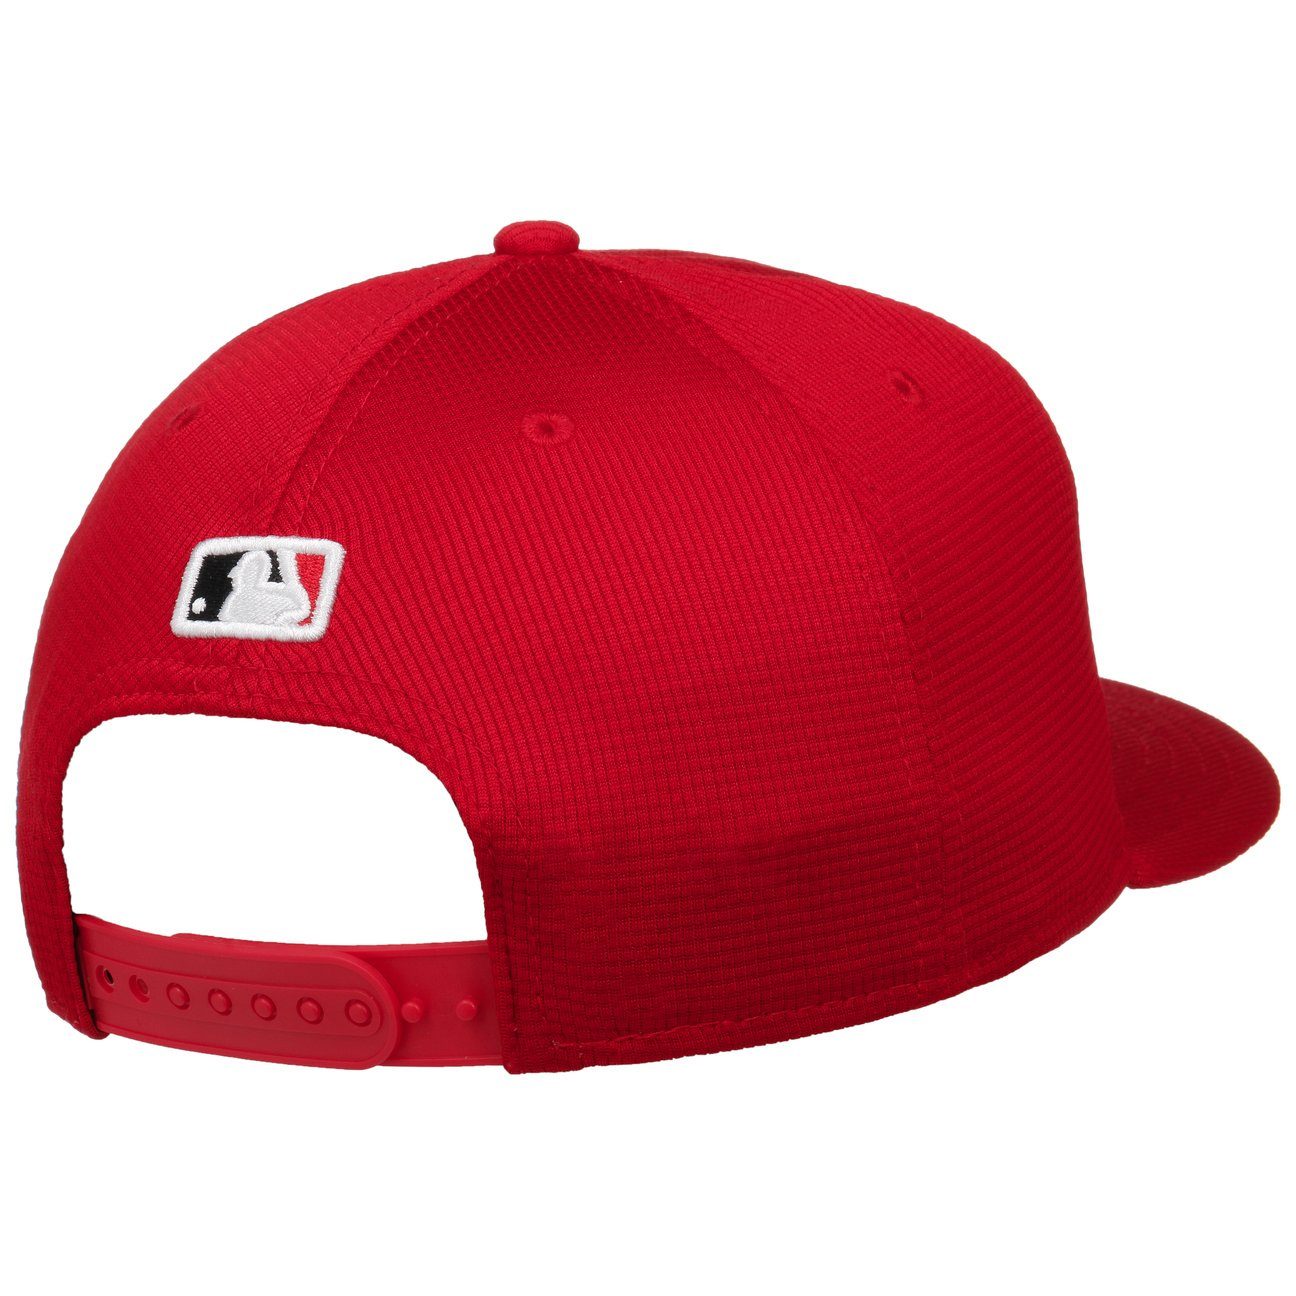 Era New Basecap Cap (1-St) Snapback Baseball